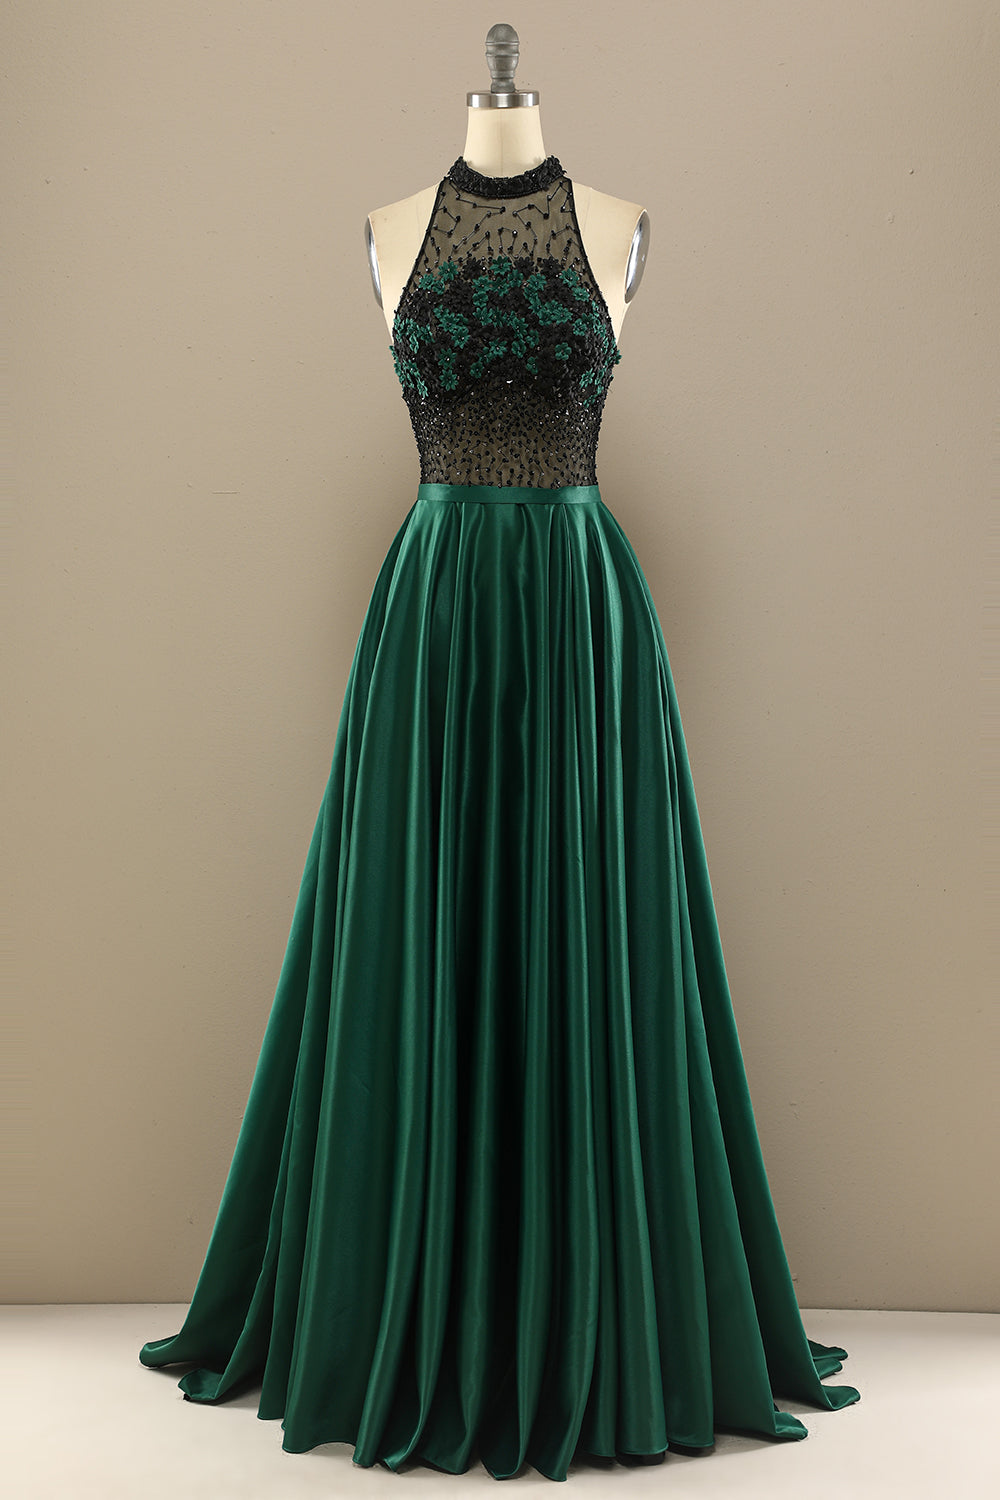 Black Bridesmaid Dress, Dark Green Long Beaded Prom Dress With Flowers